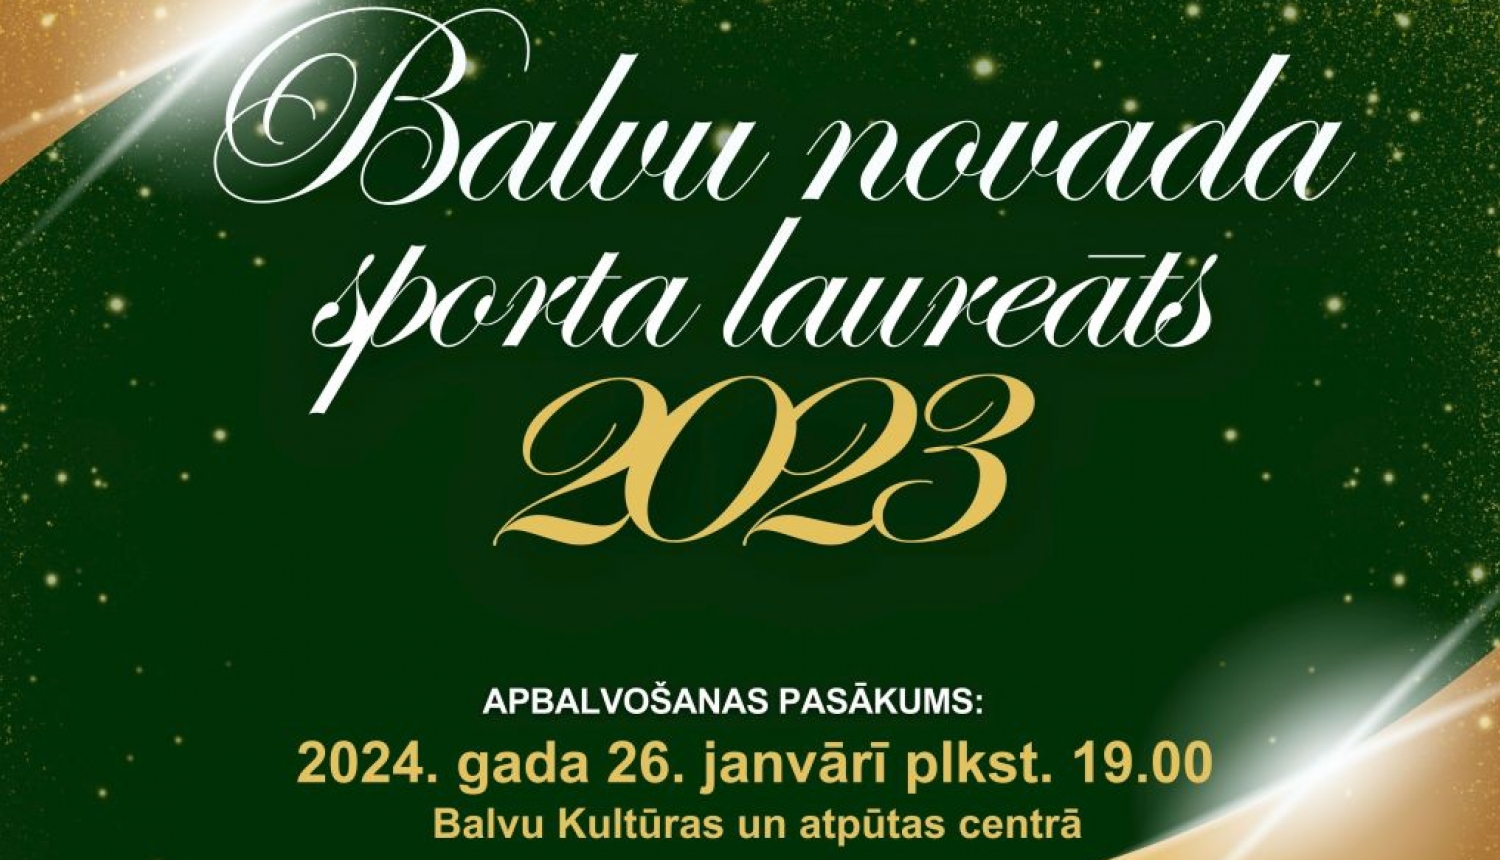 Balvu novada sporta laureāts 2023